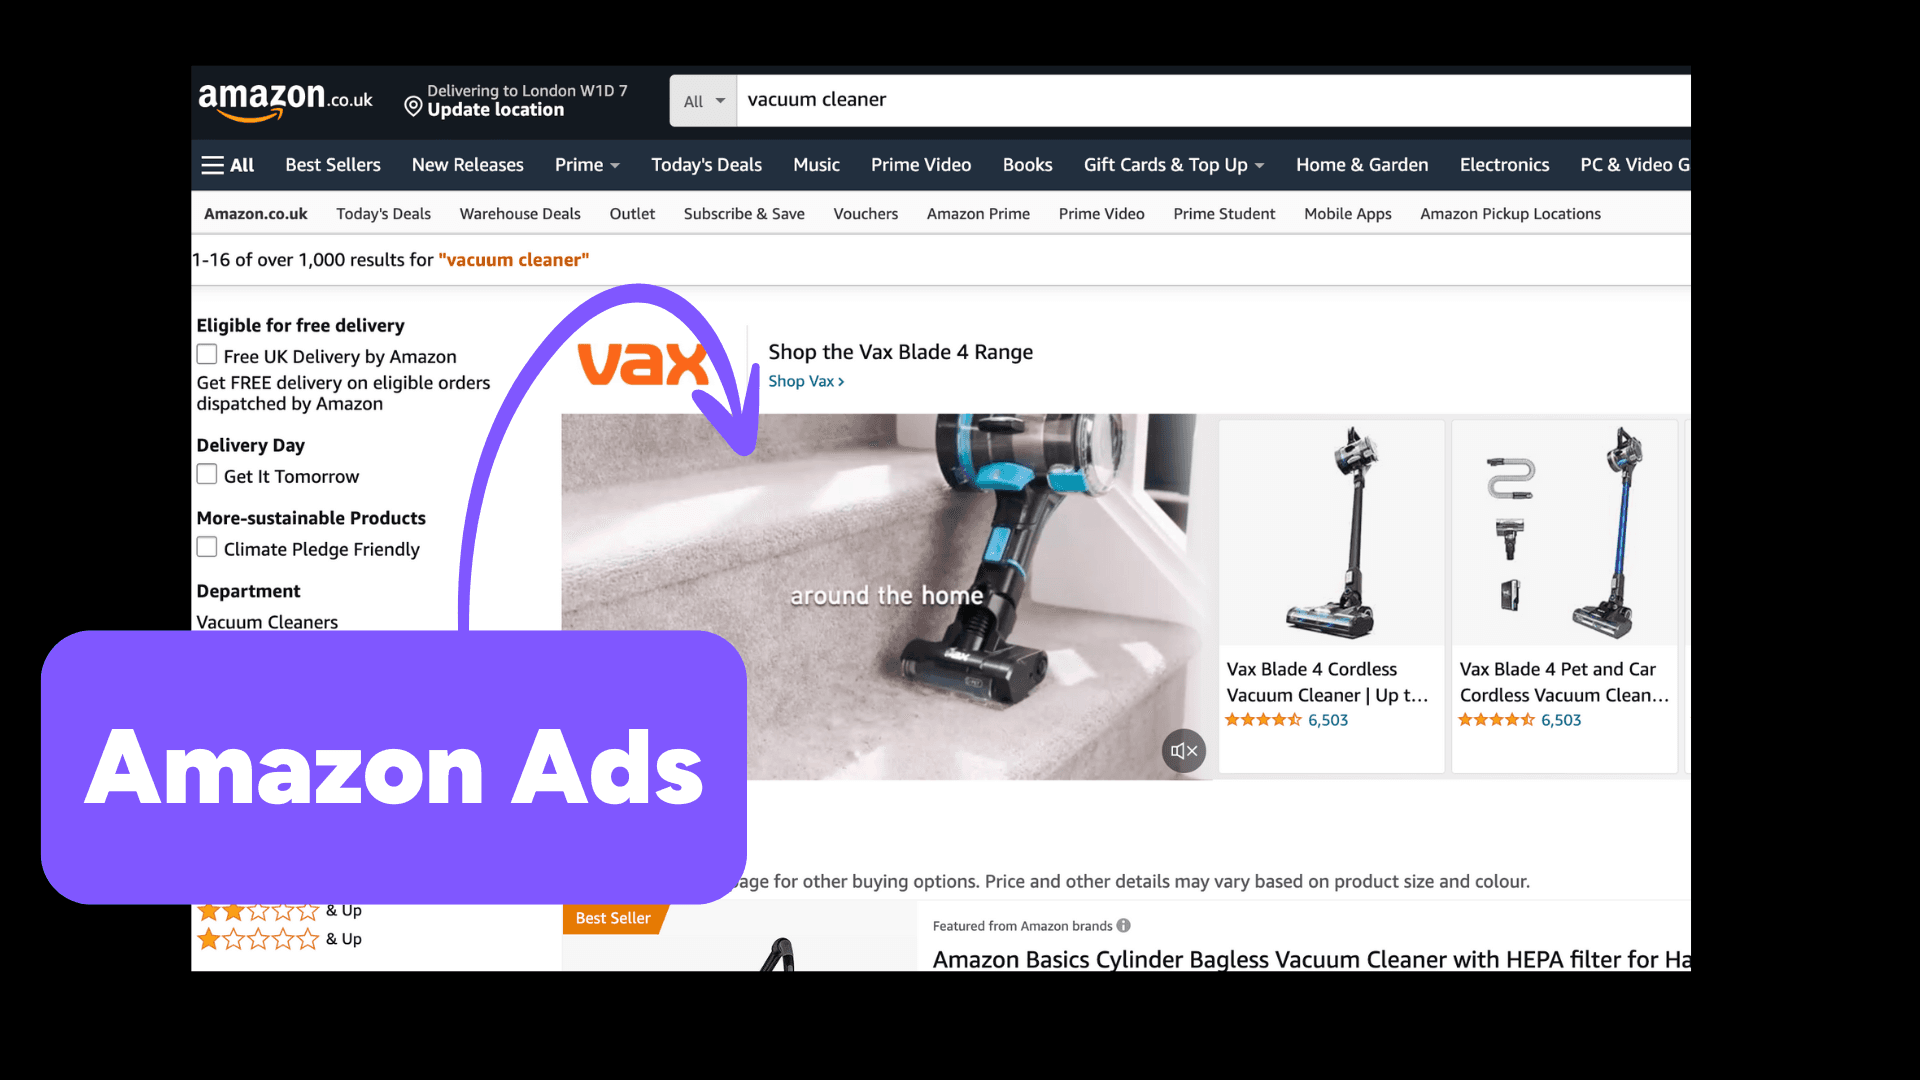 Amazon sponsored brand ads